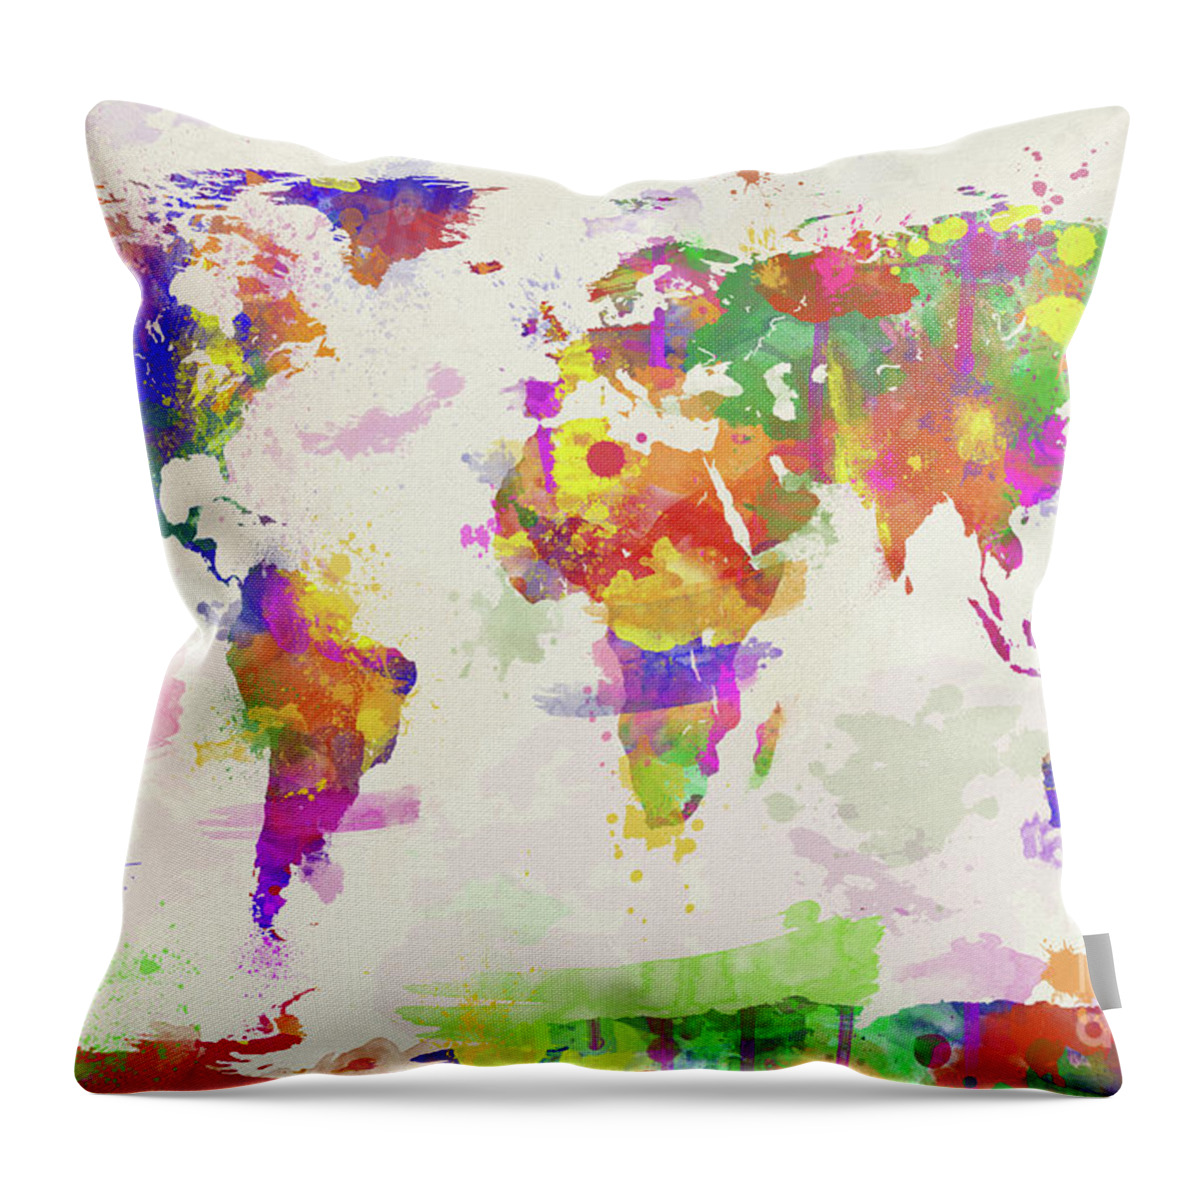 Map Throw Pillow featuring the digital art Colorful Watercolor World Map by Zaira Dzhaubaeva